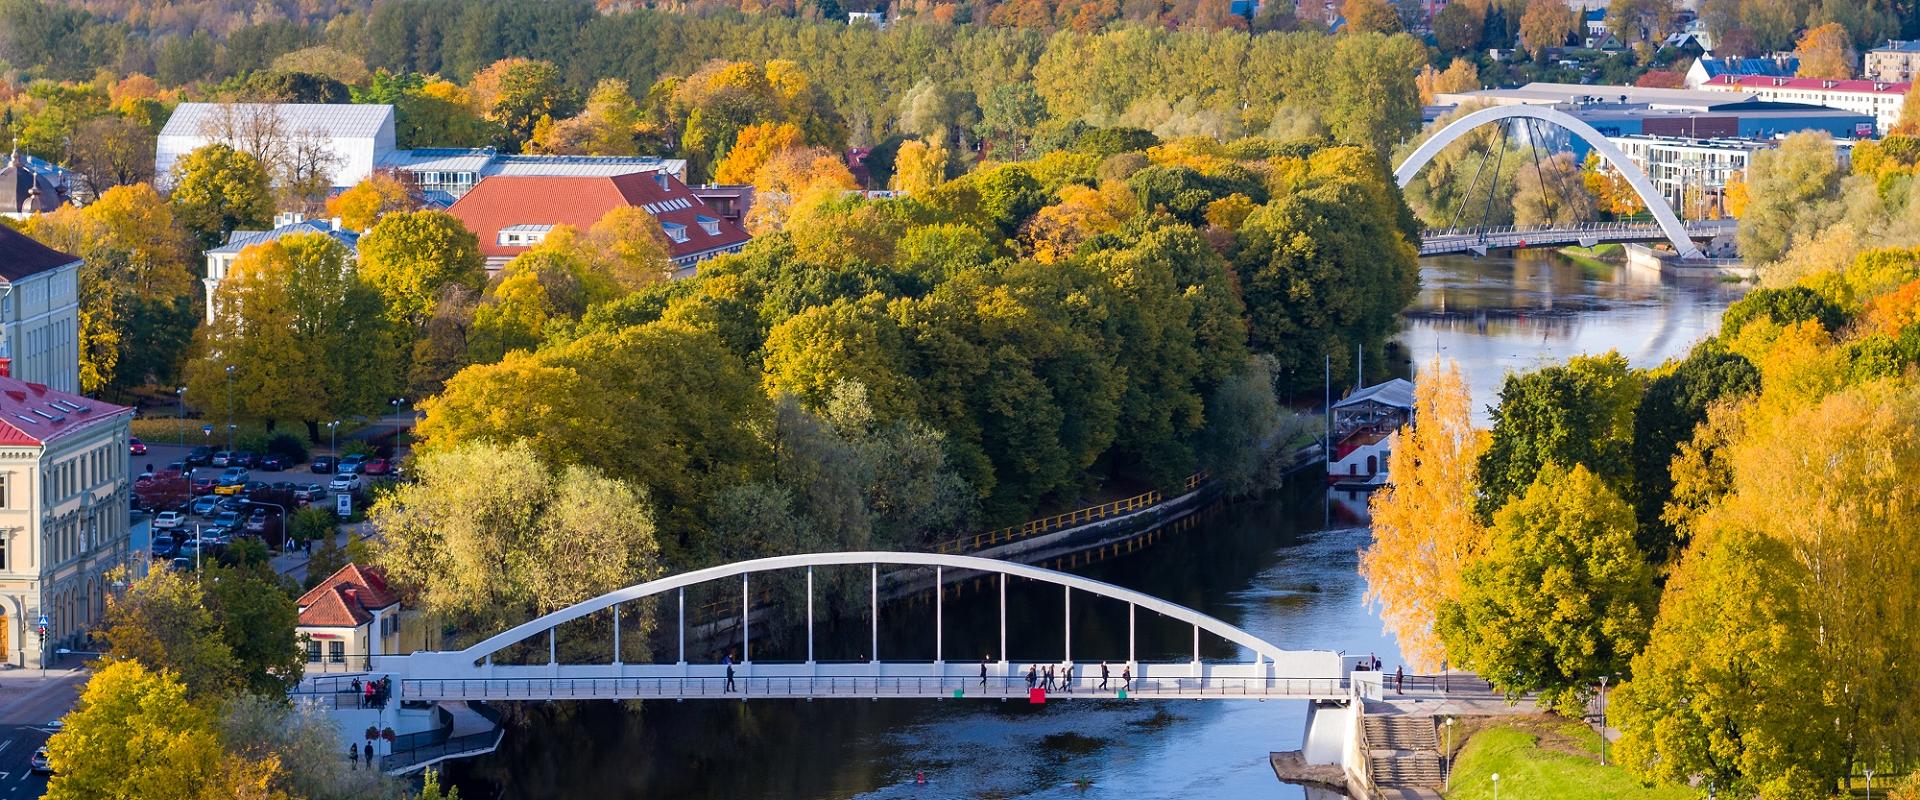 Arch Bridge and the Emajõgi River in green tones